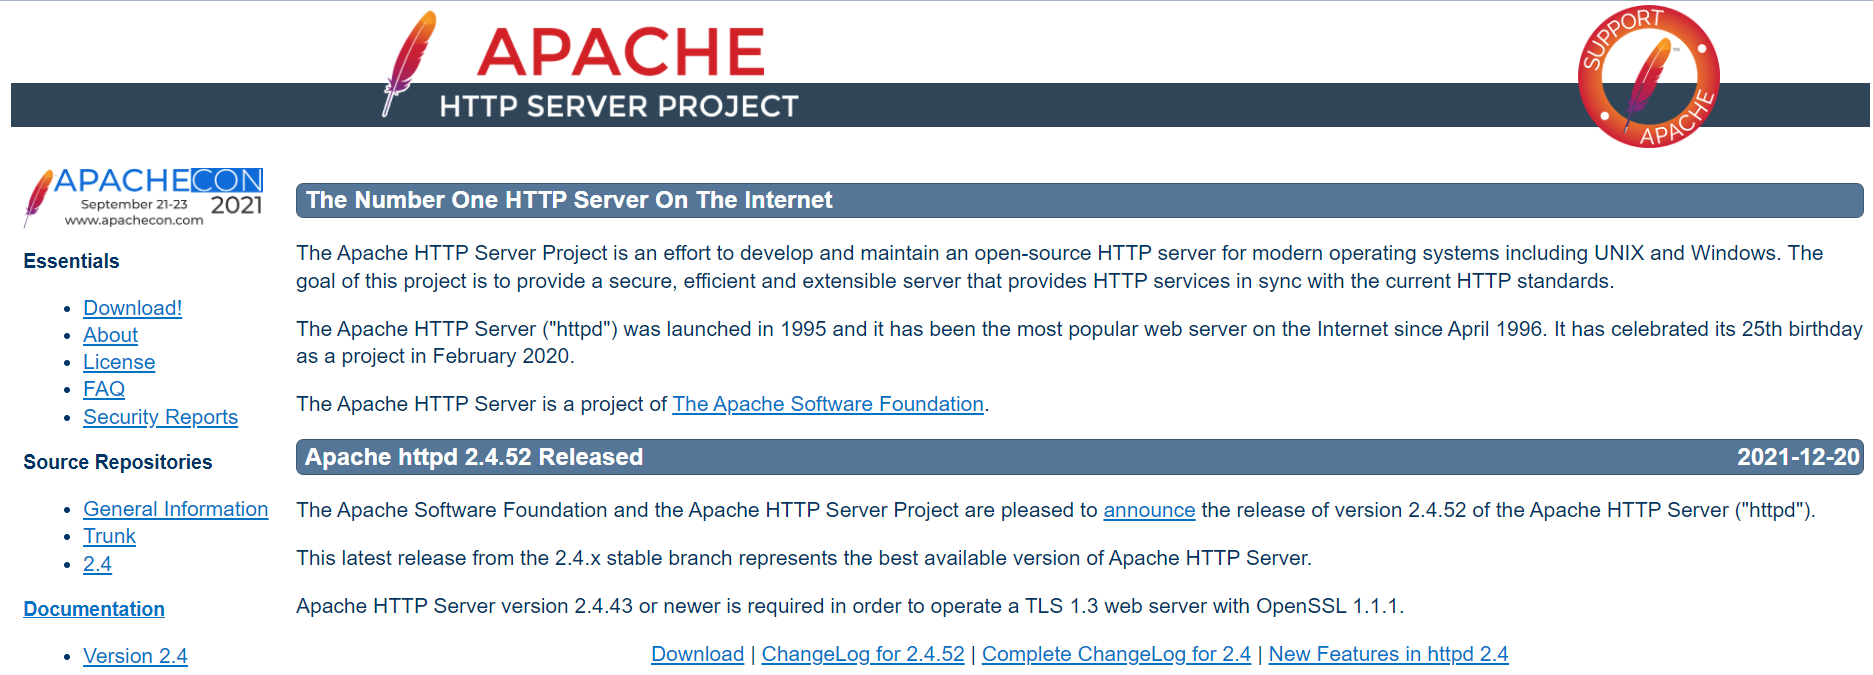 Apache homepage.